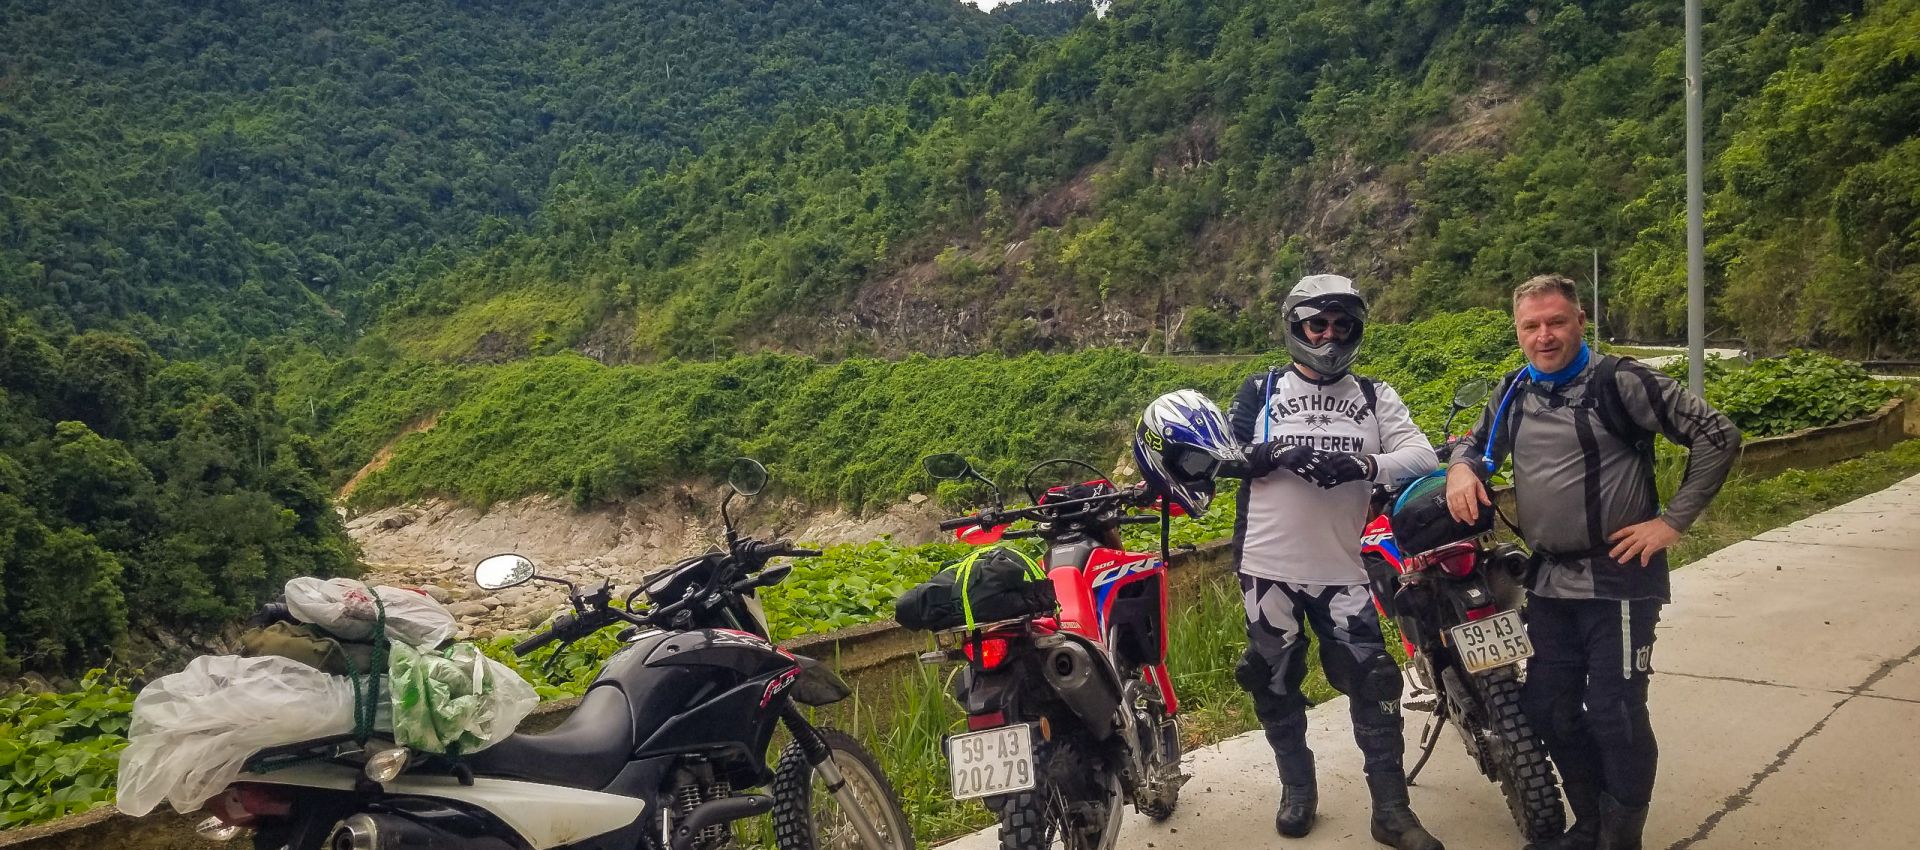 Vietnam Motorbike Tour From Da Nang To Hue